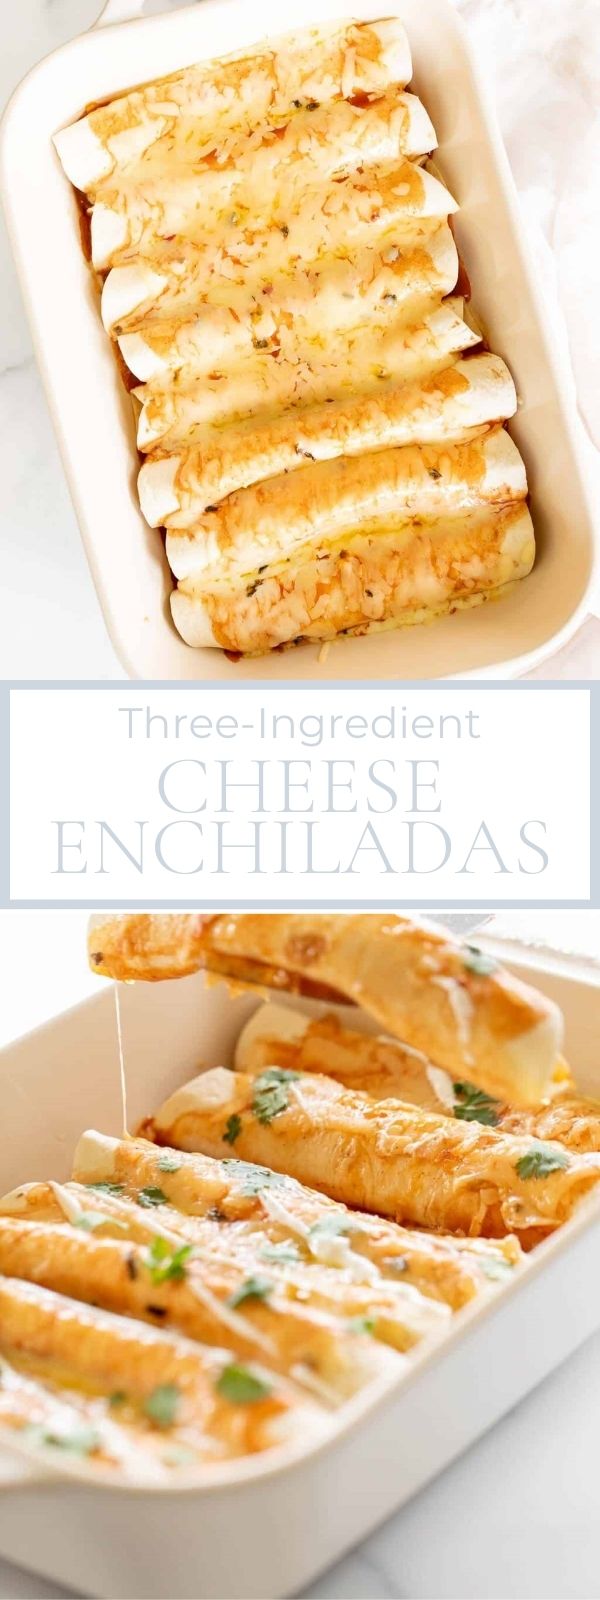 Cheesy baked enchiladas in rectangular white baking dish